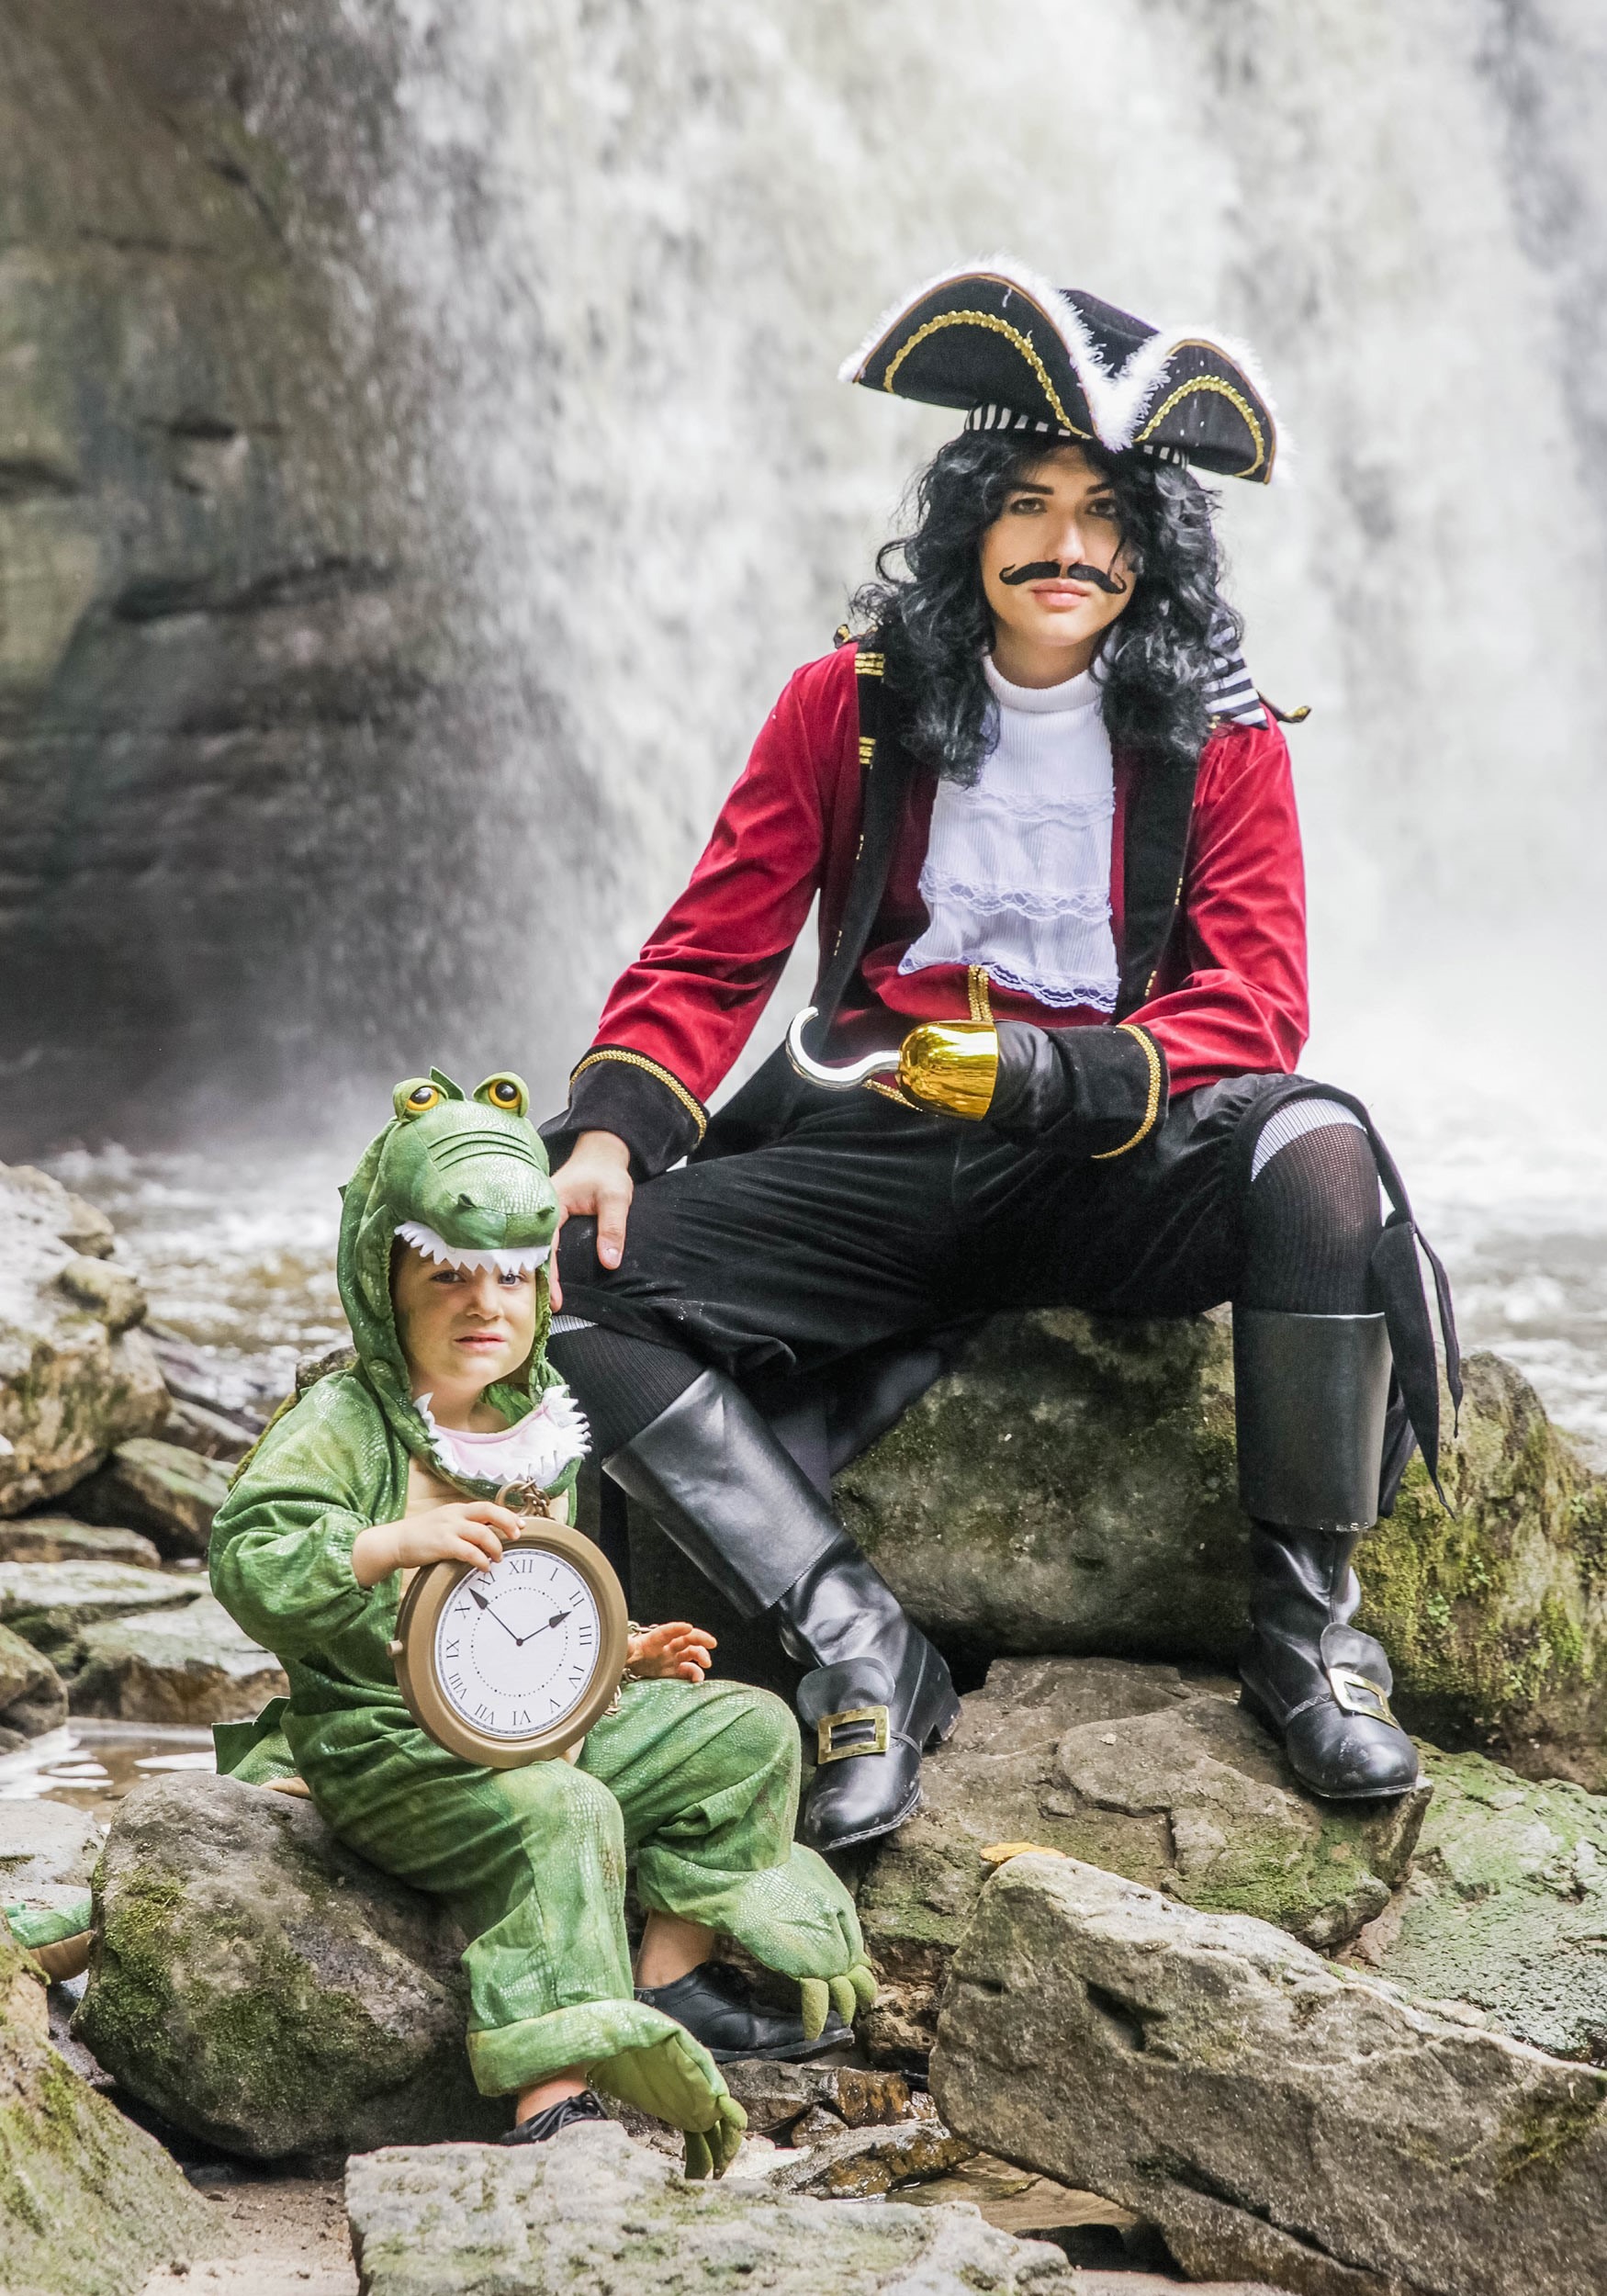 Pirate Captain Deluxe - Buccaneer - Hook - Costume - Adult - 2 Sizes –  Arlene's Costumes